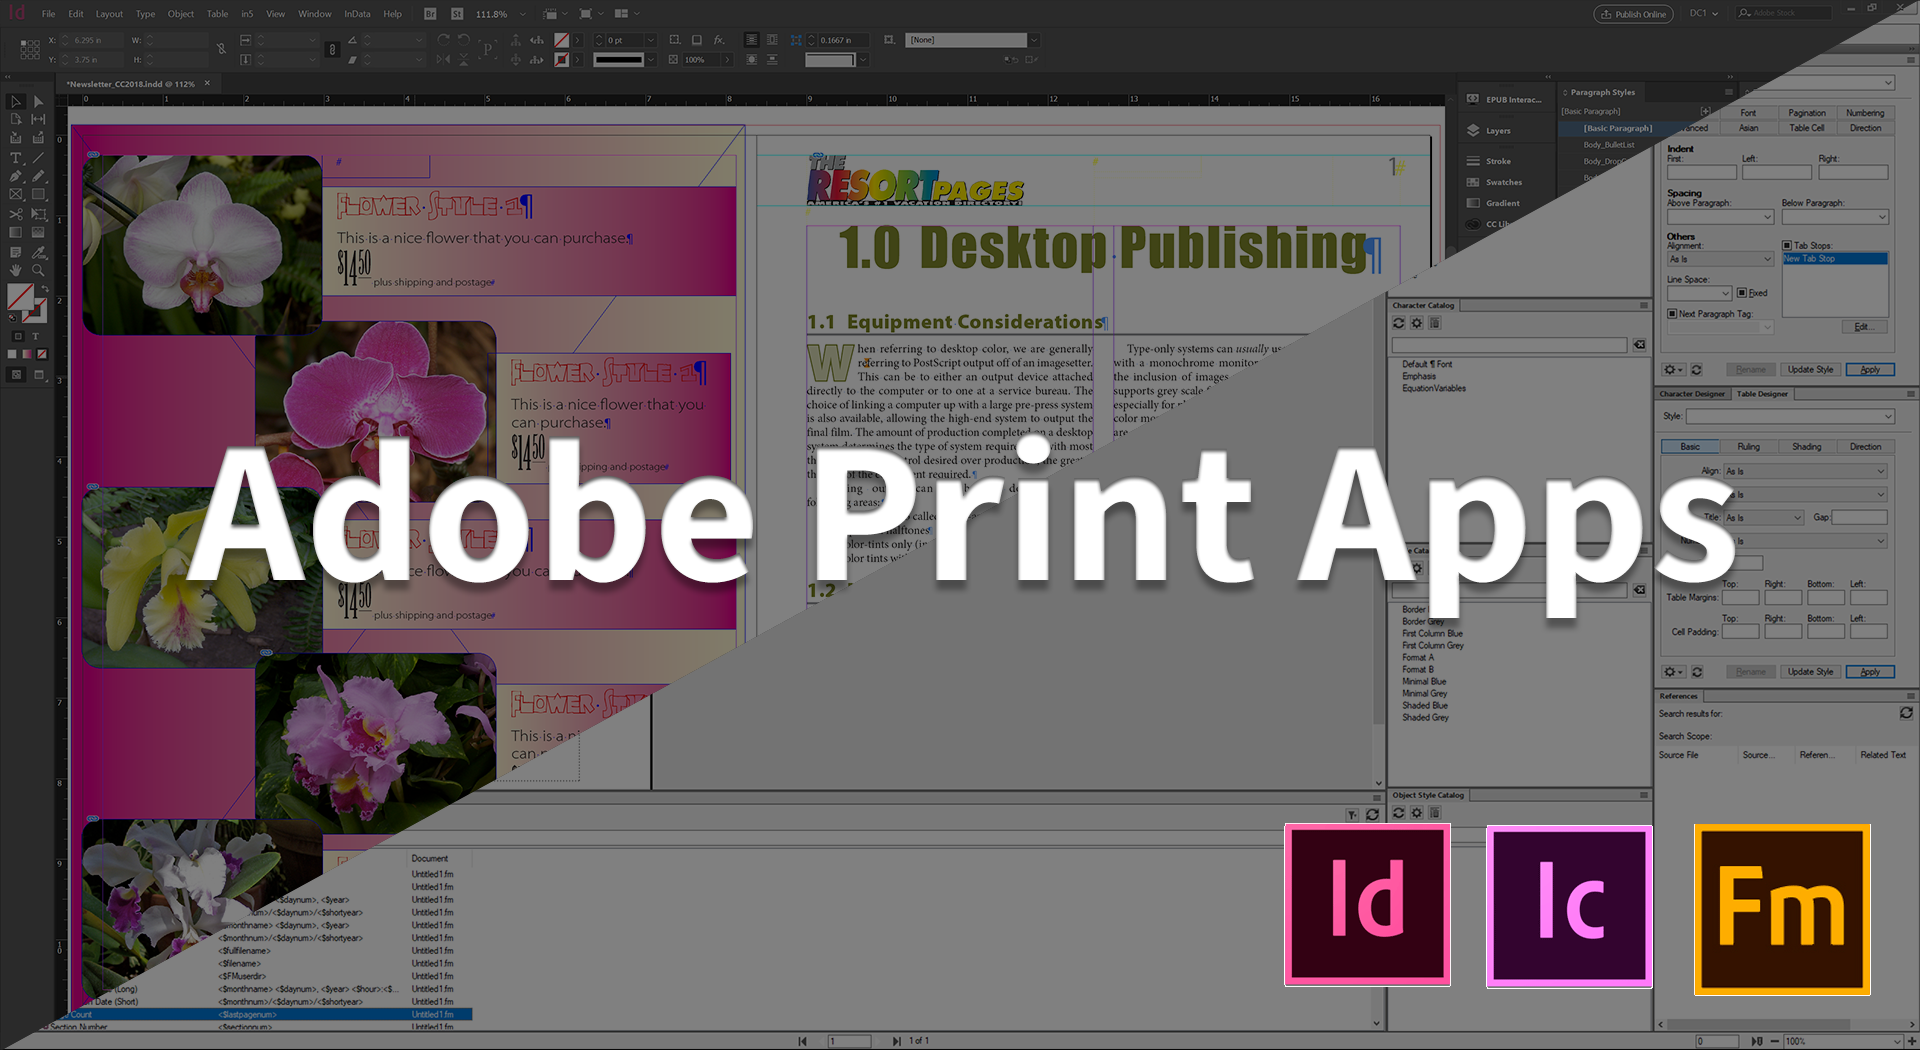 Adobe Print Apps